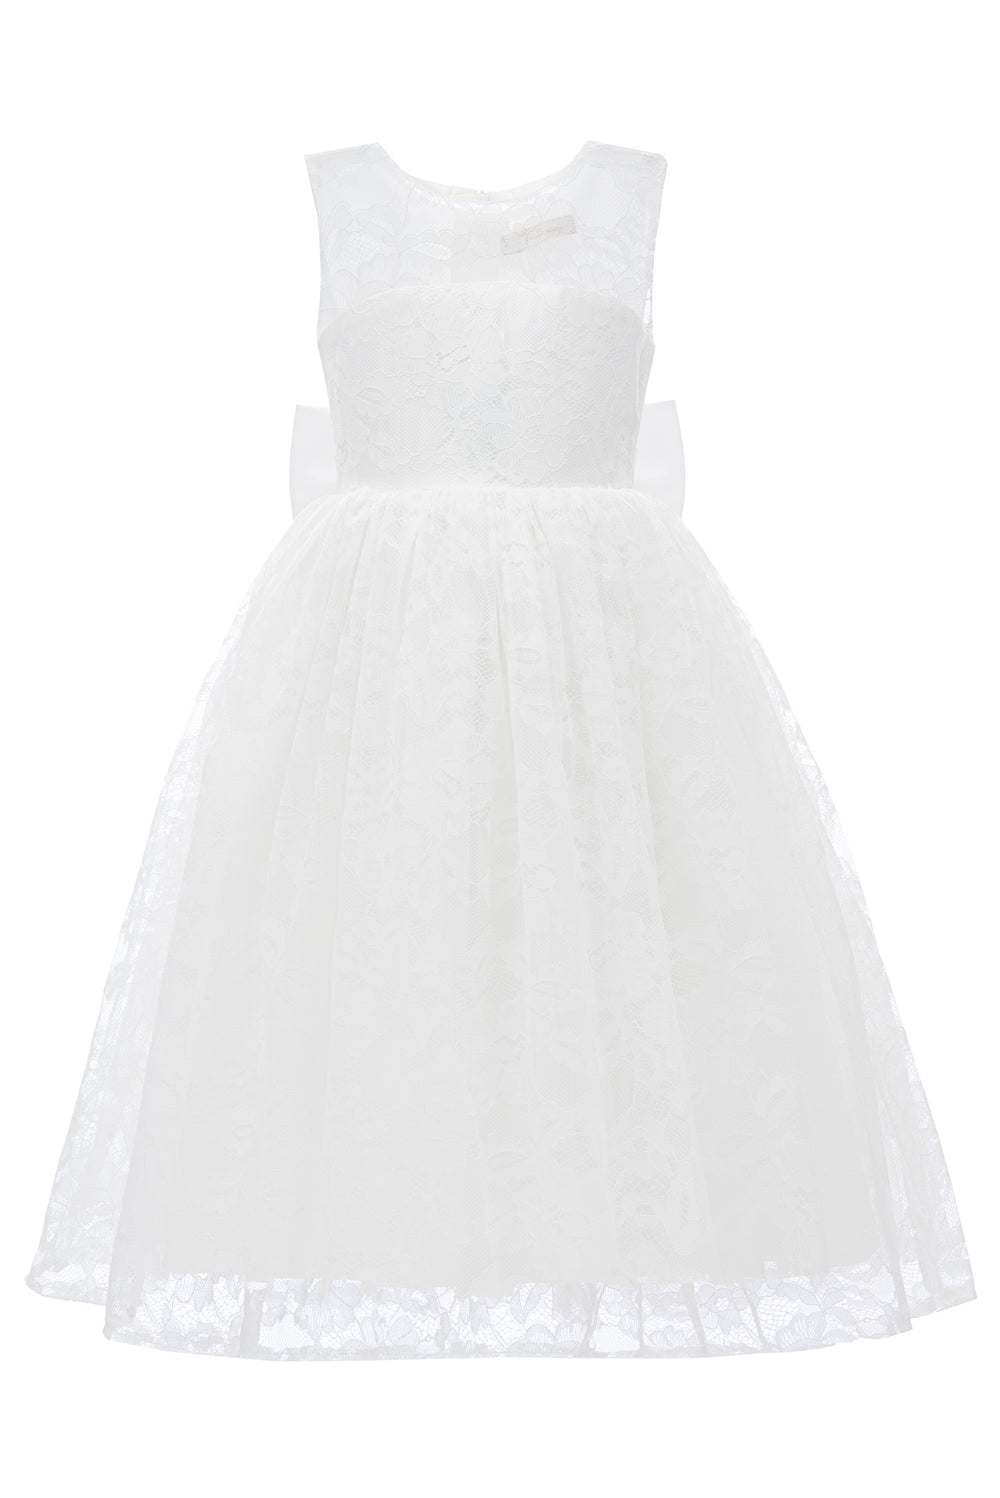 kids-atelier-tulleen-kid-girl-white-rossemere-lace-embroidered-tulle-dress-tt10-ar